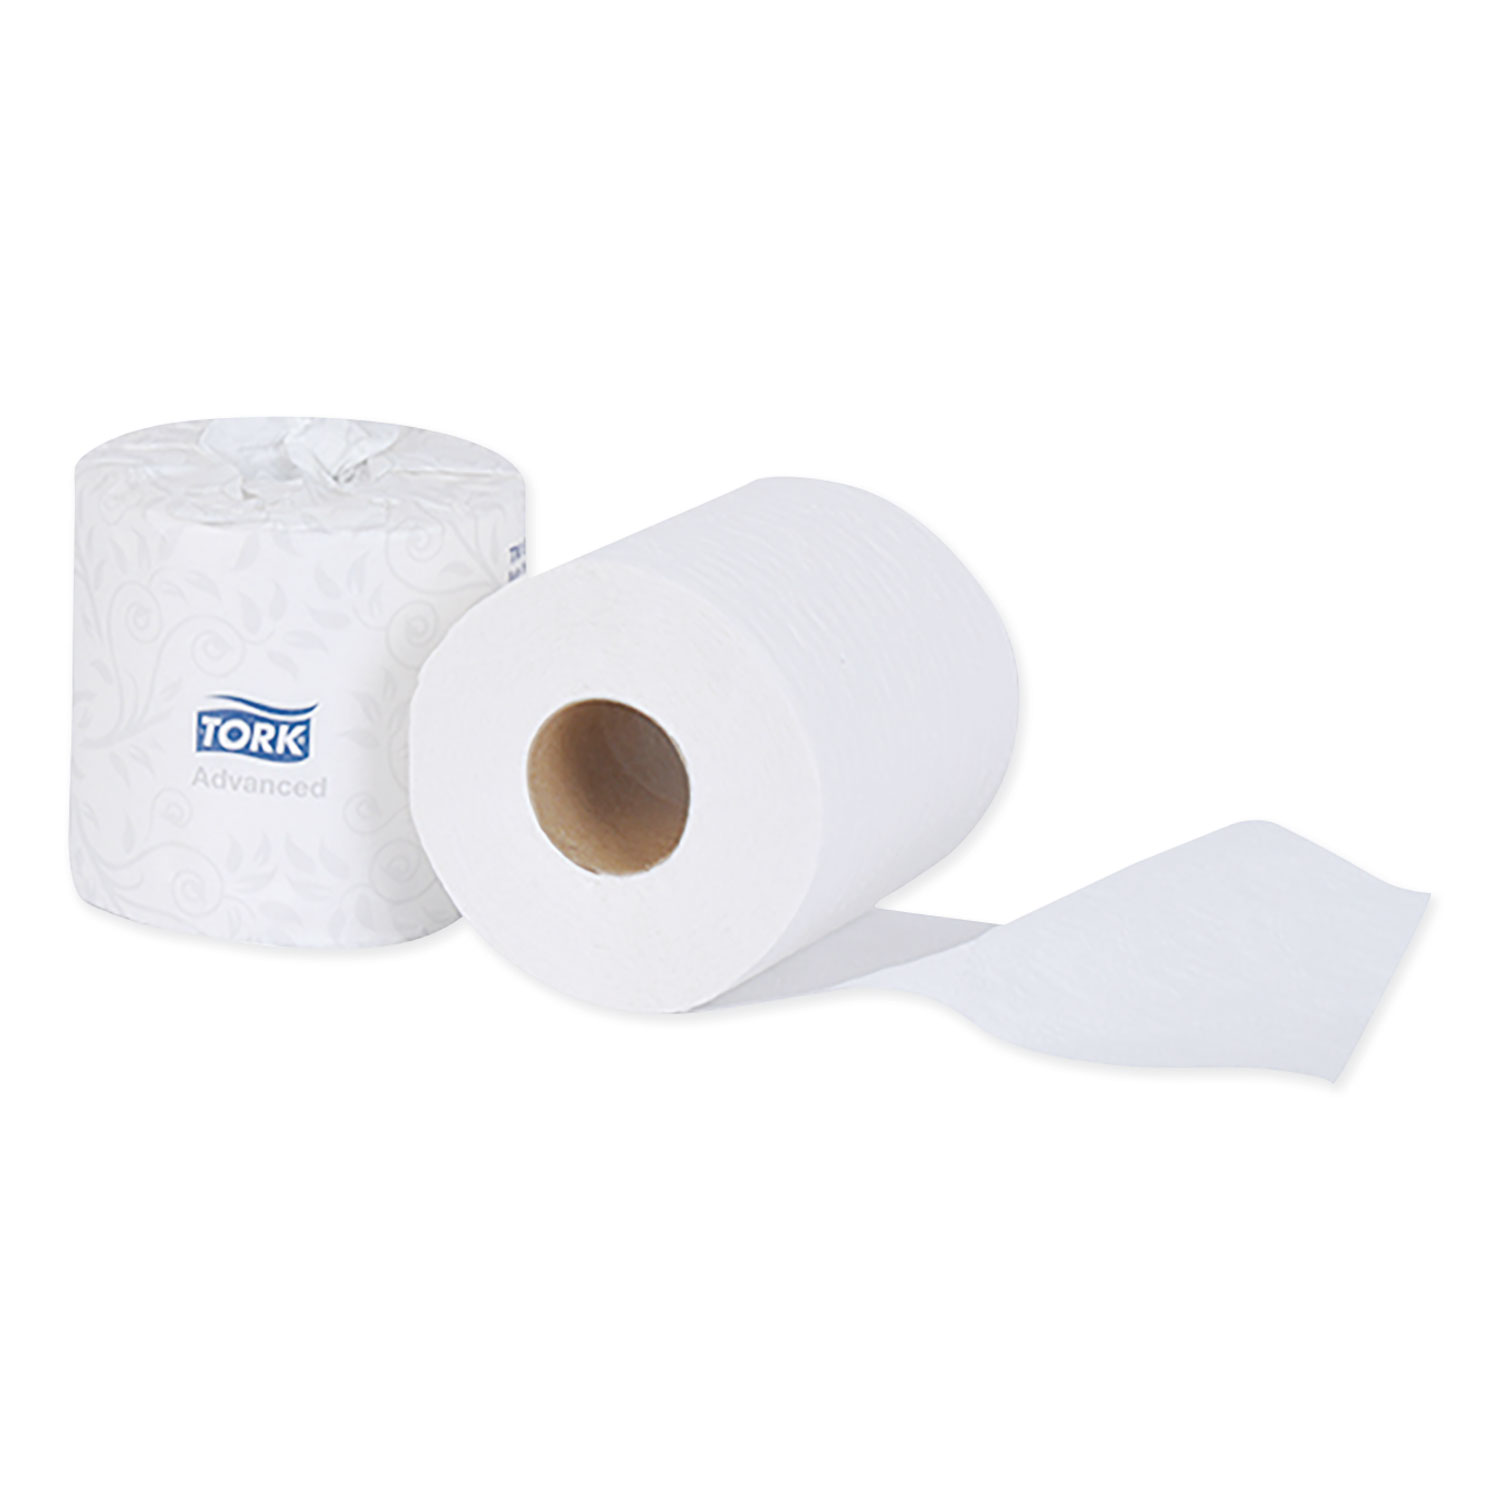  Tork 245949 Advanced Bath Tissue, Septic Safe, 2-Ply, White, 500 Sheets/Roll, 48 Rolls/Carton (TRK245949) 